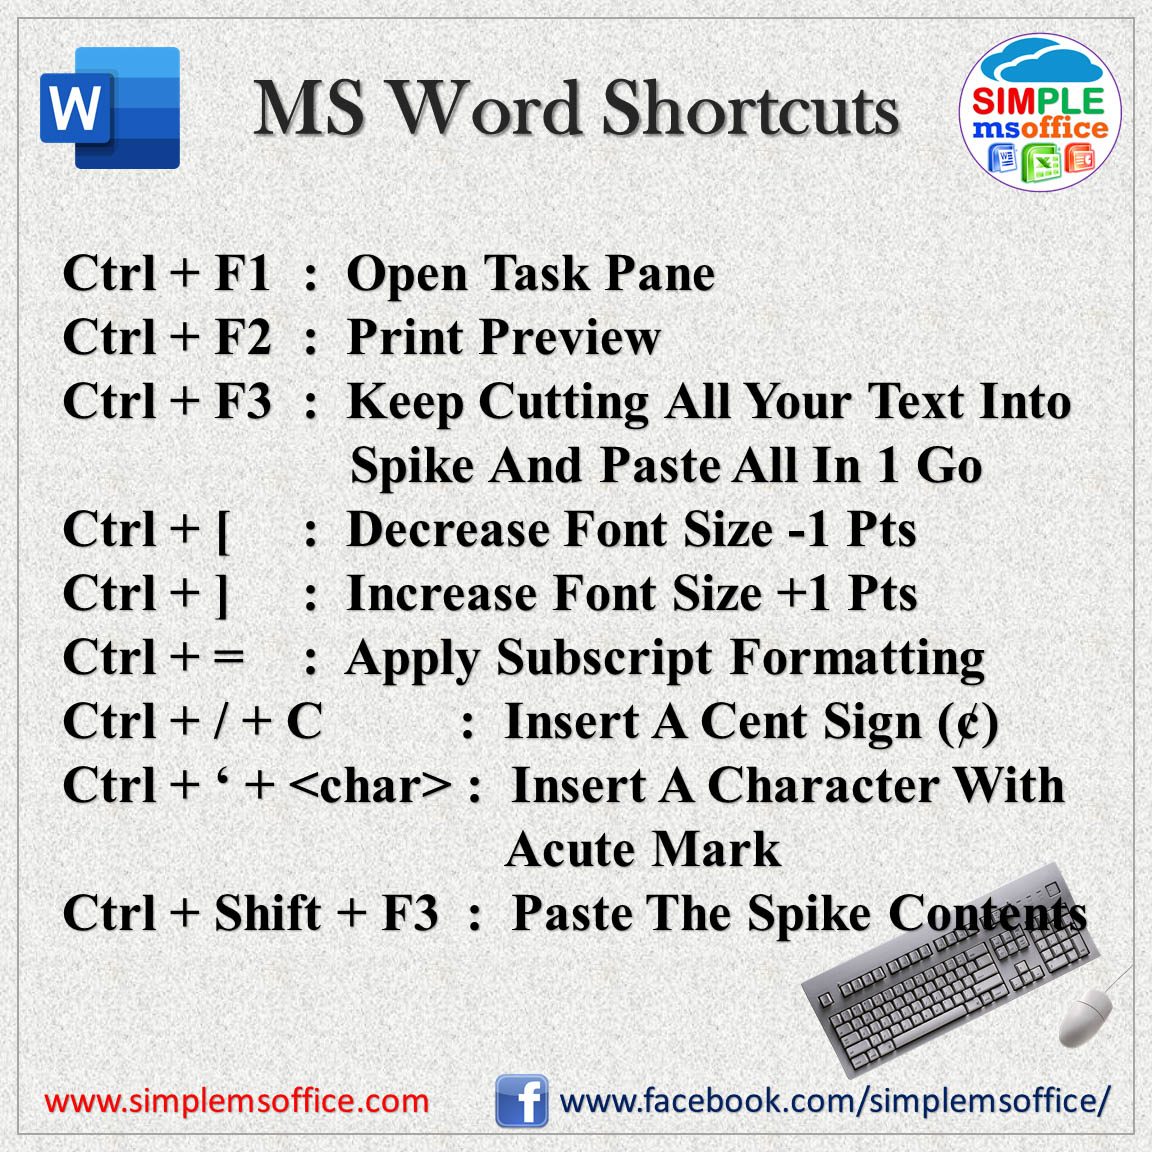 ms-word-shortcuts-03-simplemsoffice